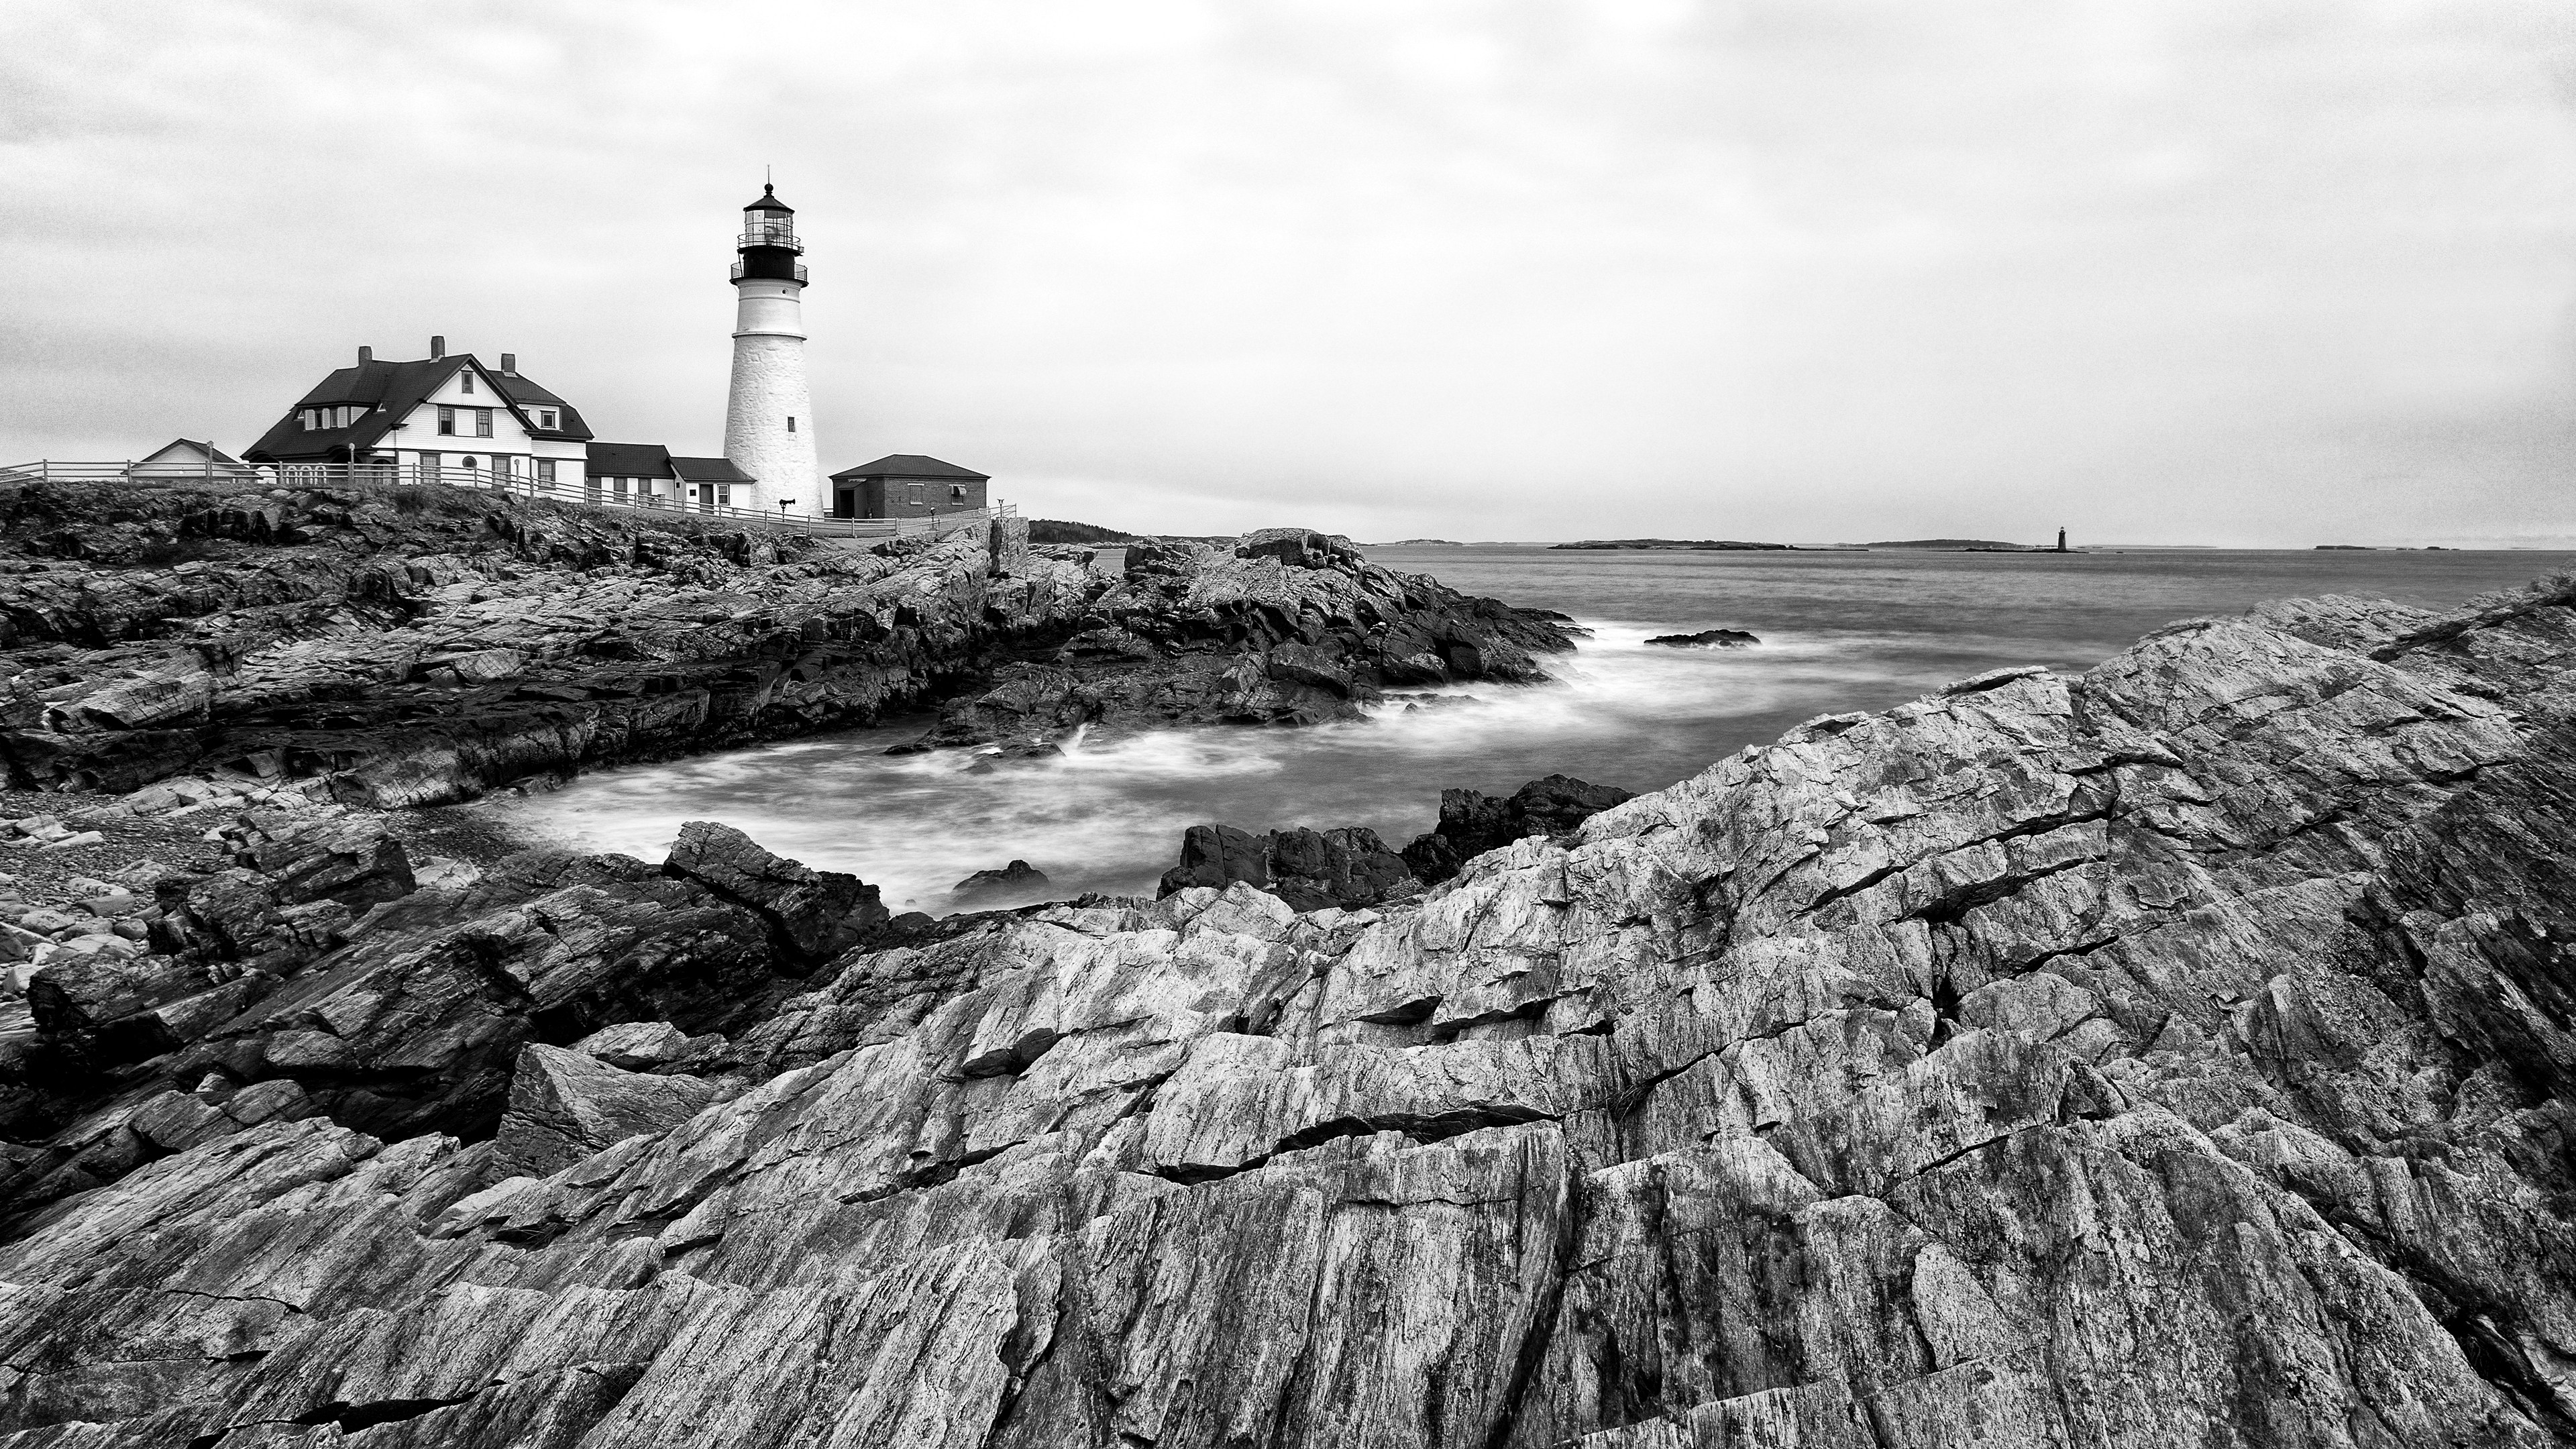 General 3840x2160 landscape Portland sea rocks lighthouse monochrome USA Maine outdoors